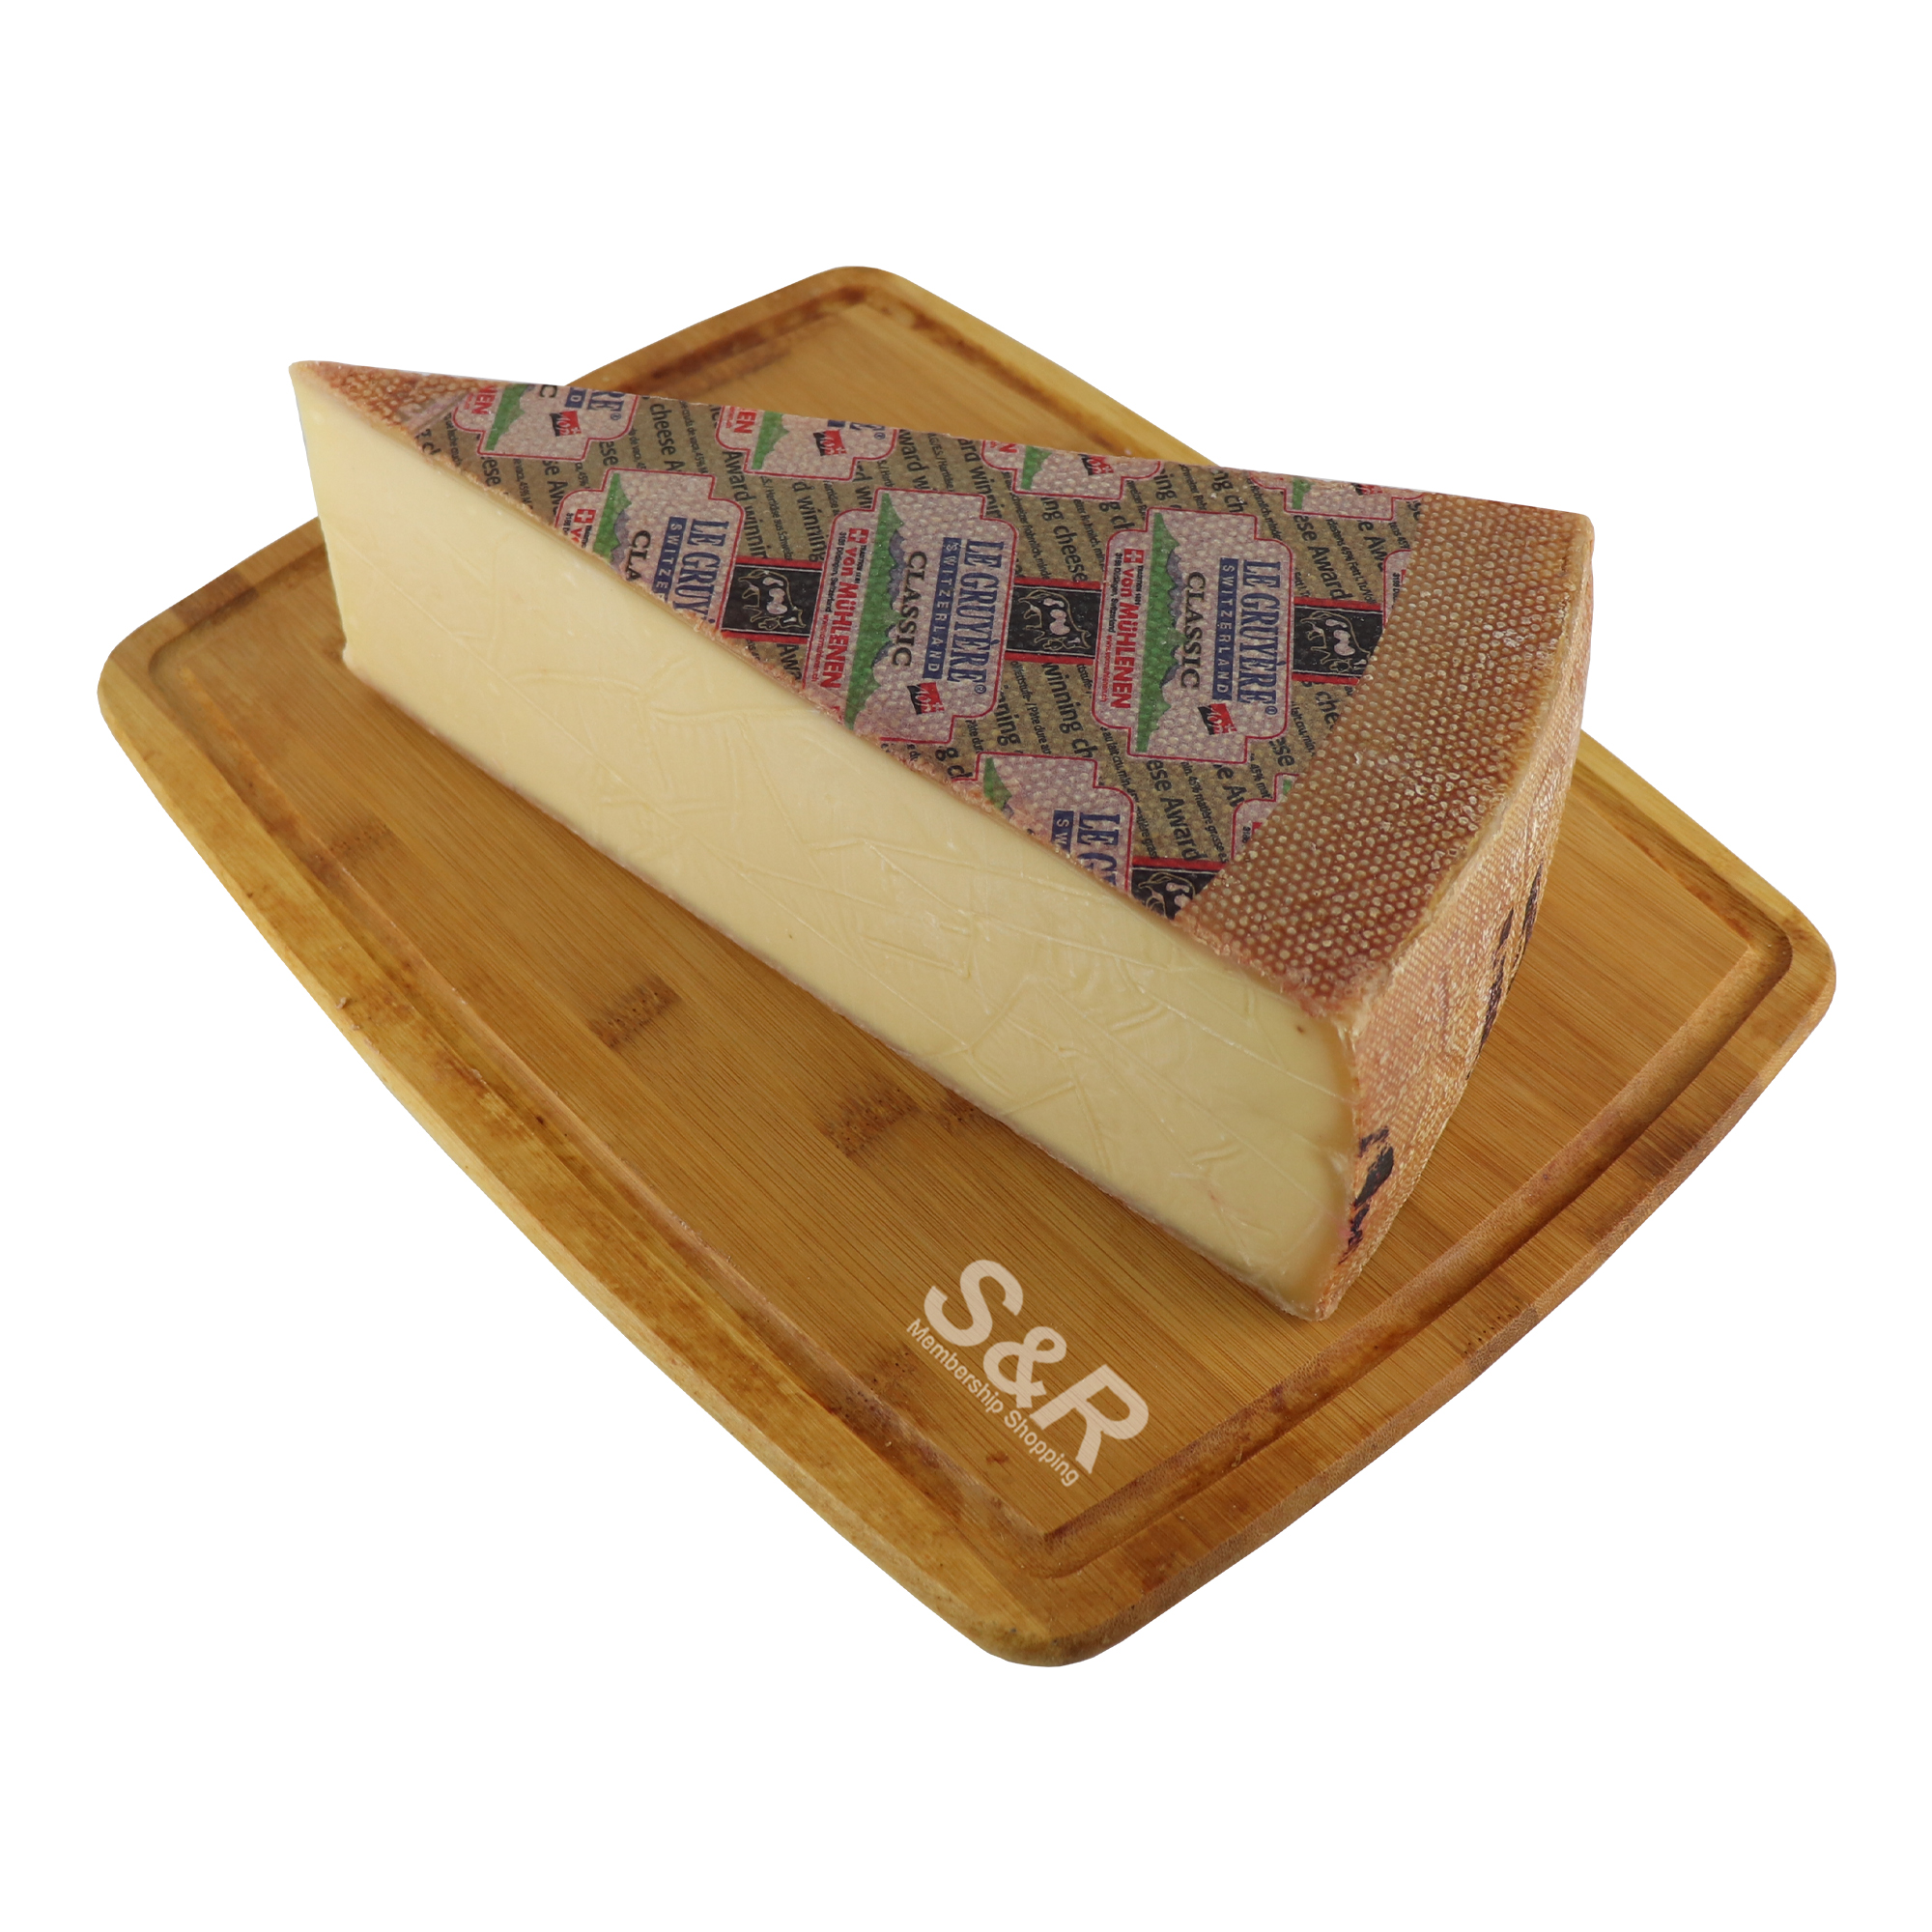 S&R Gruyere Swiss Cheese approx. 3kg